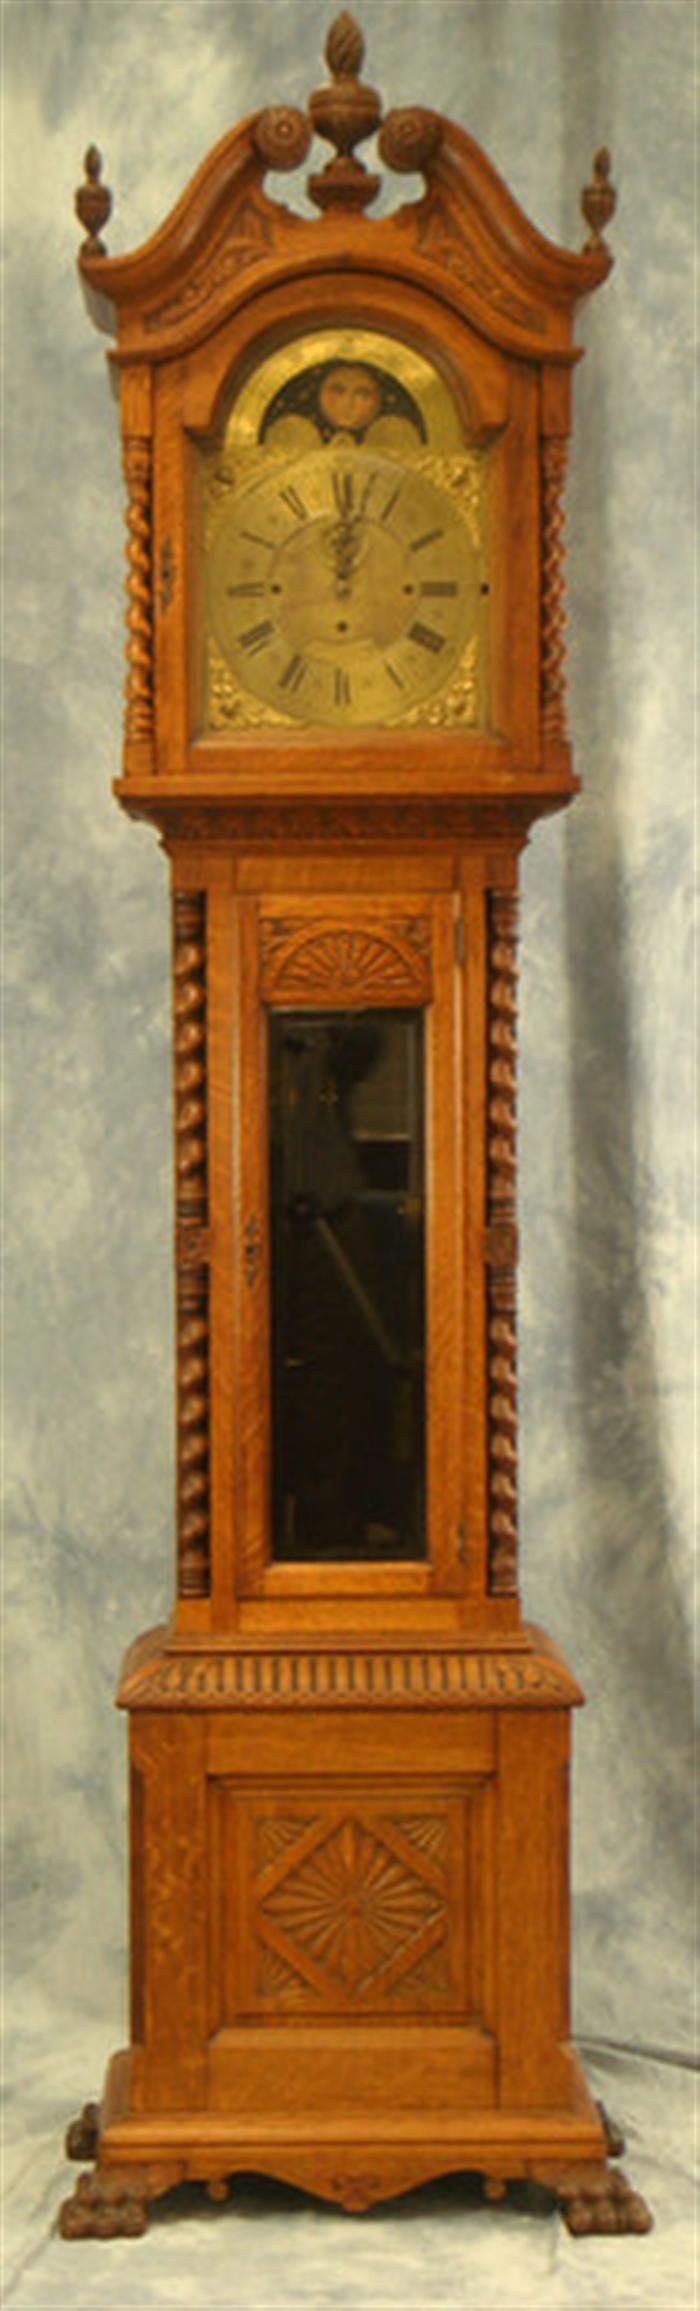 Carved oak tall case clock 3 weight 3d504